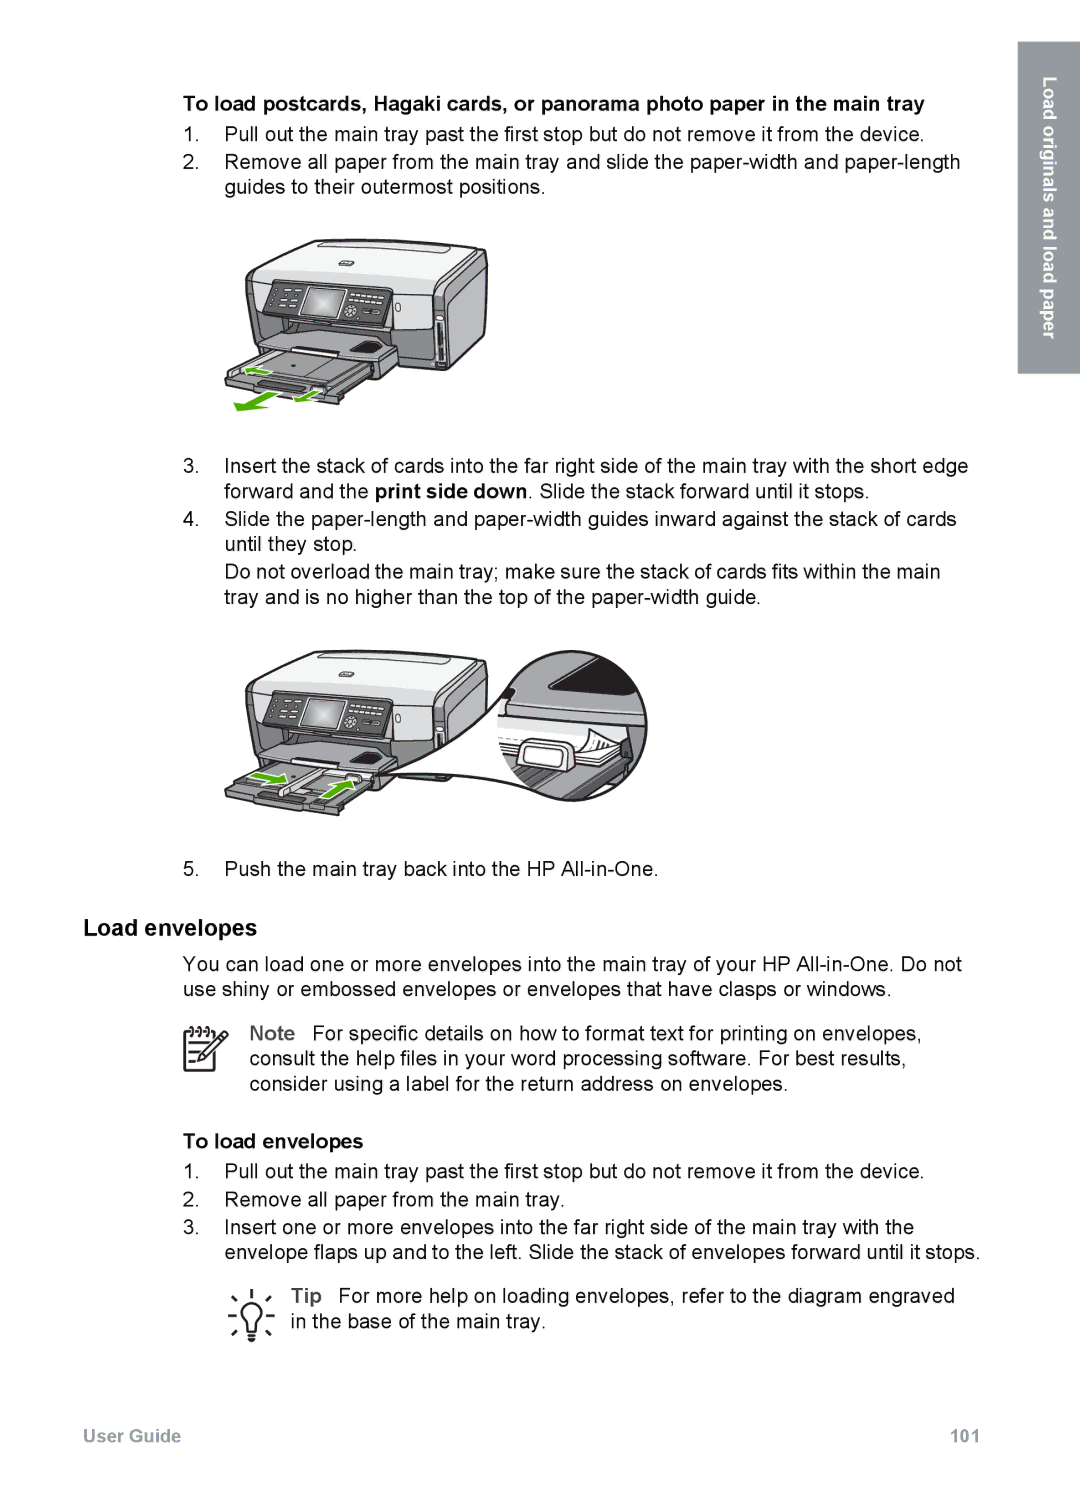 HP 3300 manual Load envelopes, To load envelopes 